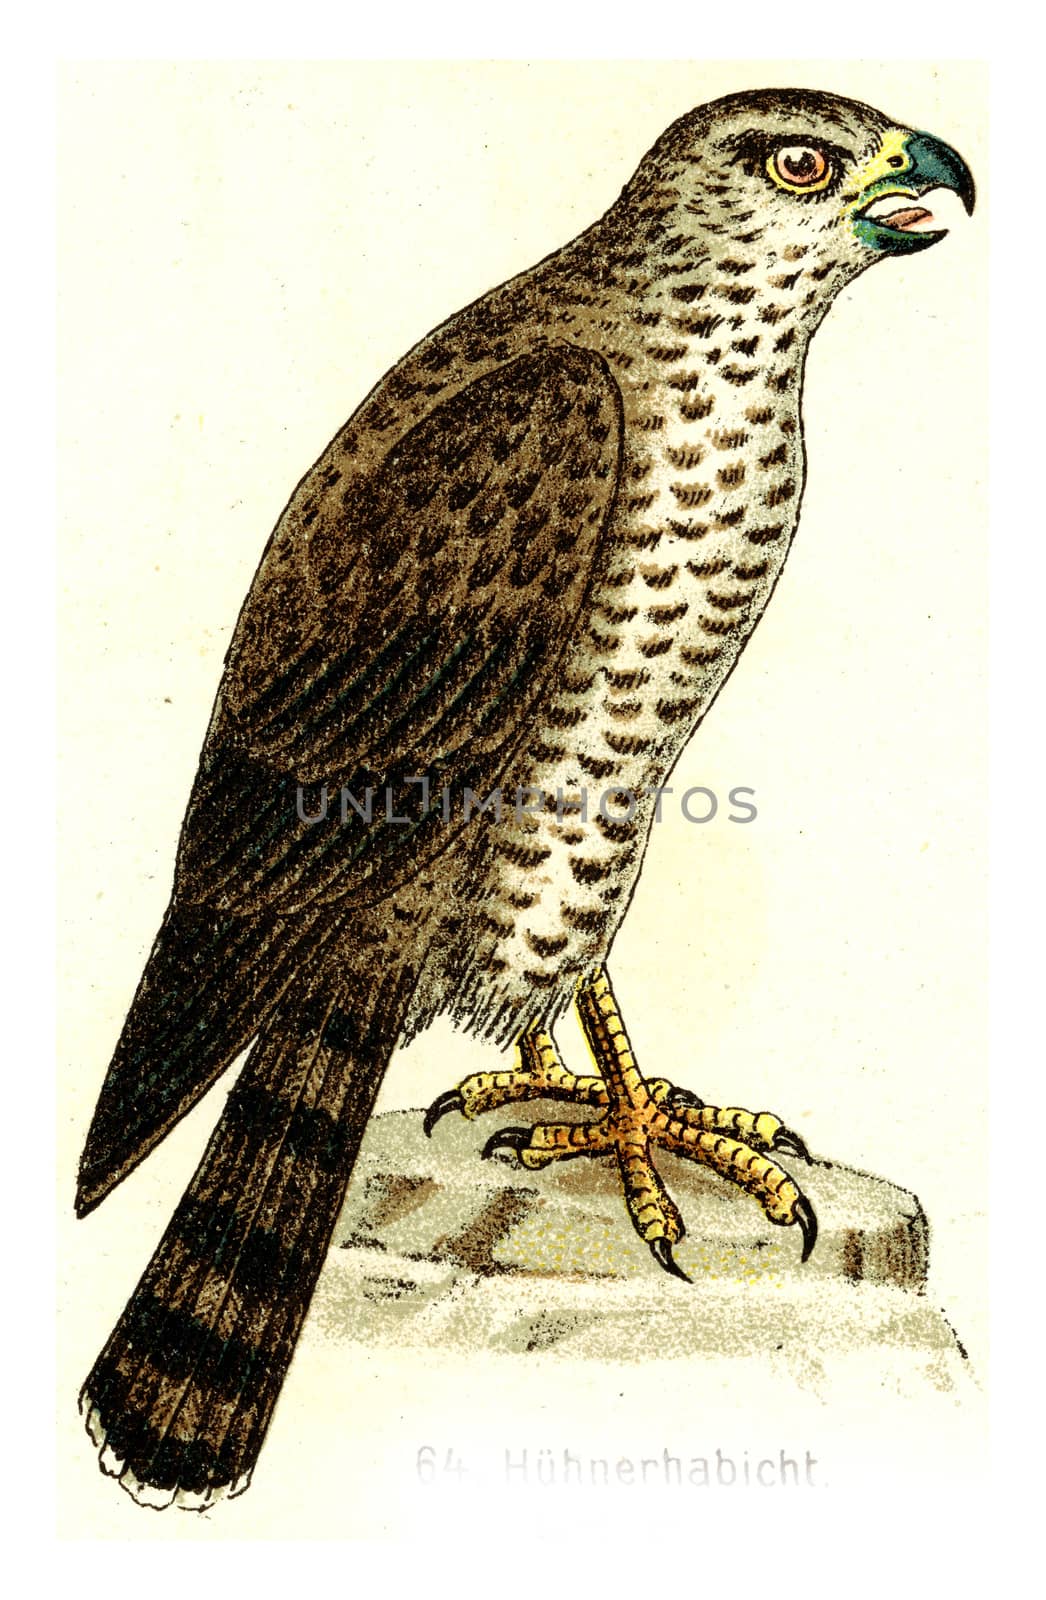 Northern goshawk, vintage engraved illustration. From Deutch Birds of Europe Atlas.
